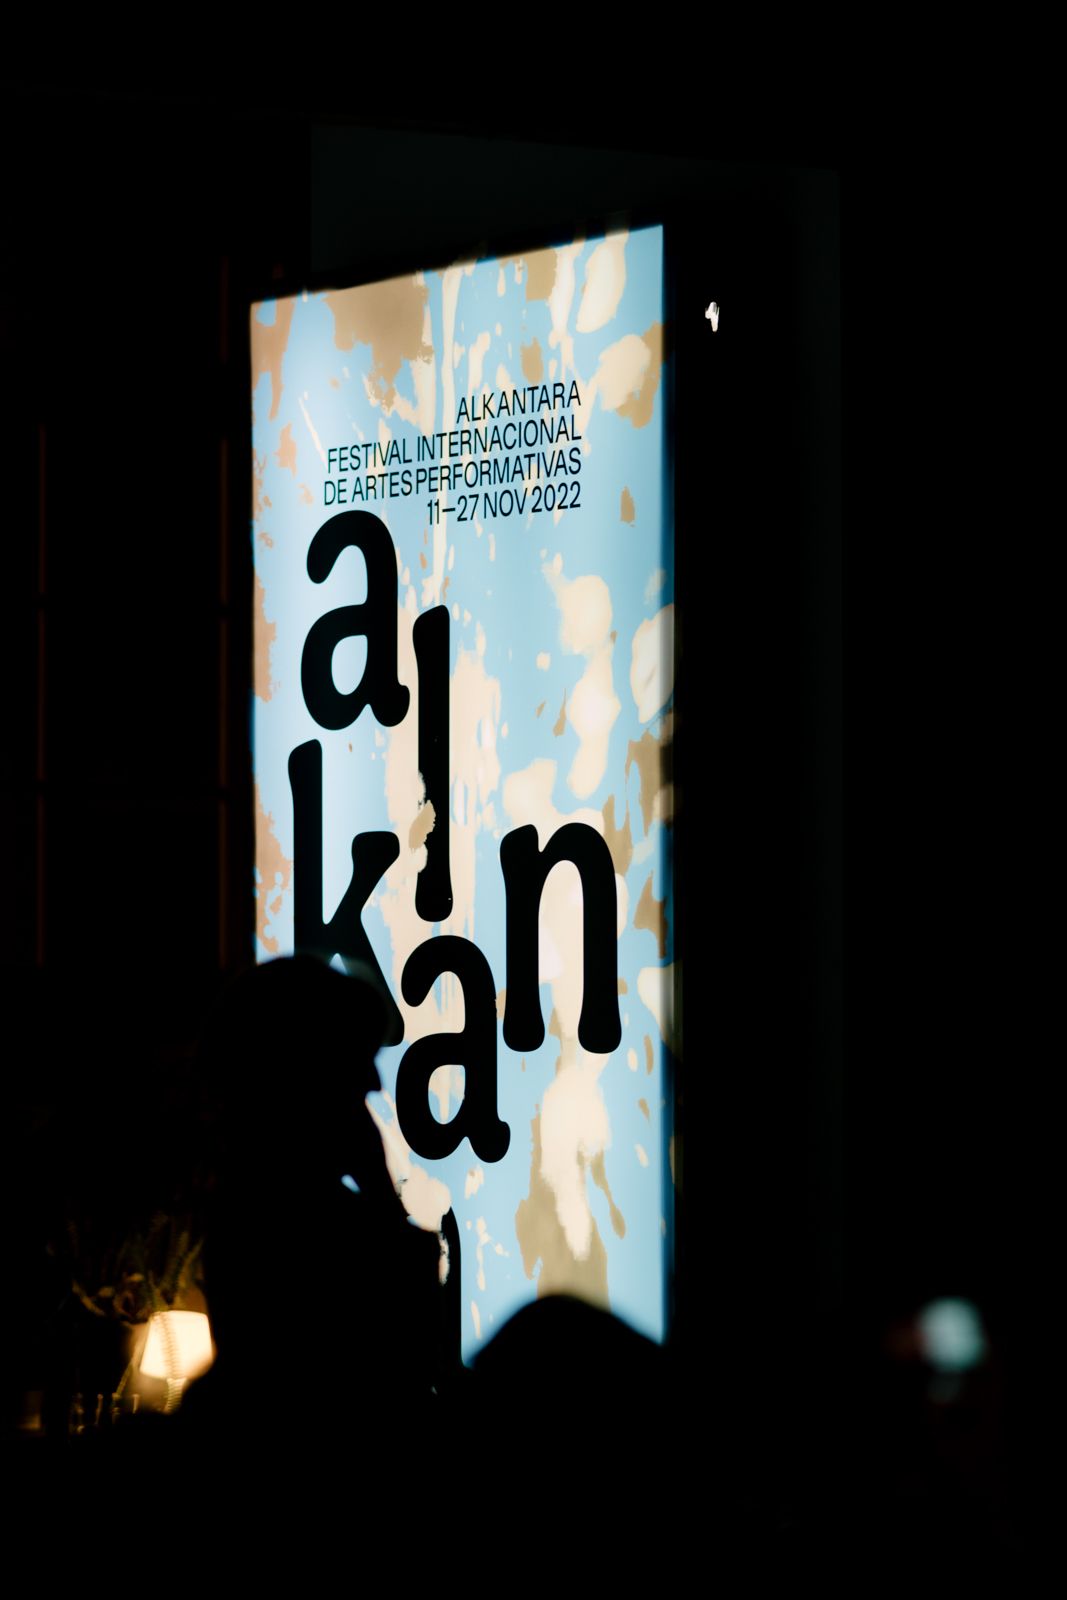 ALKANARA - Alkantara Festival 2022 Photo Gallery - ©